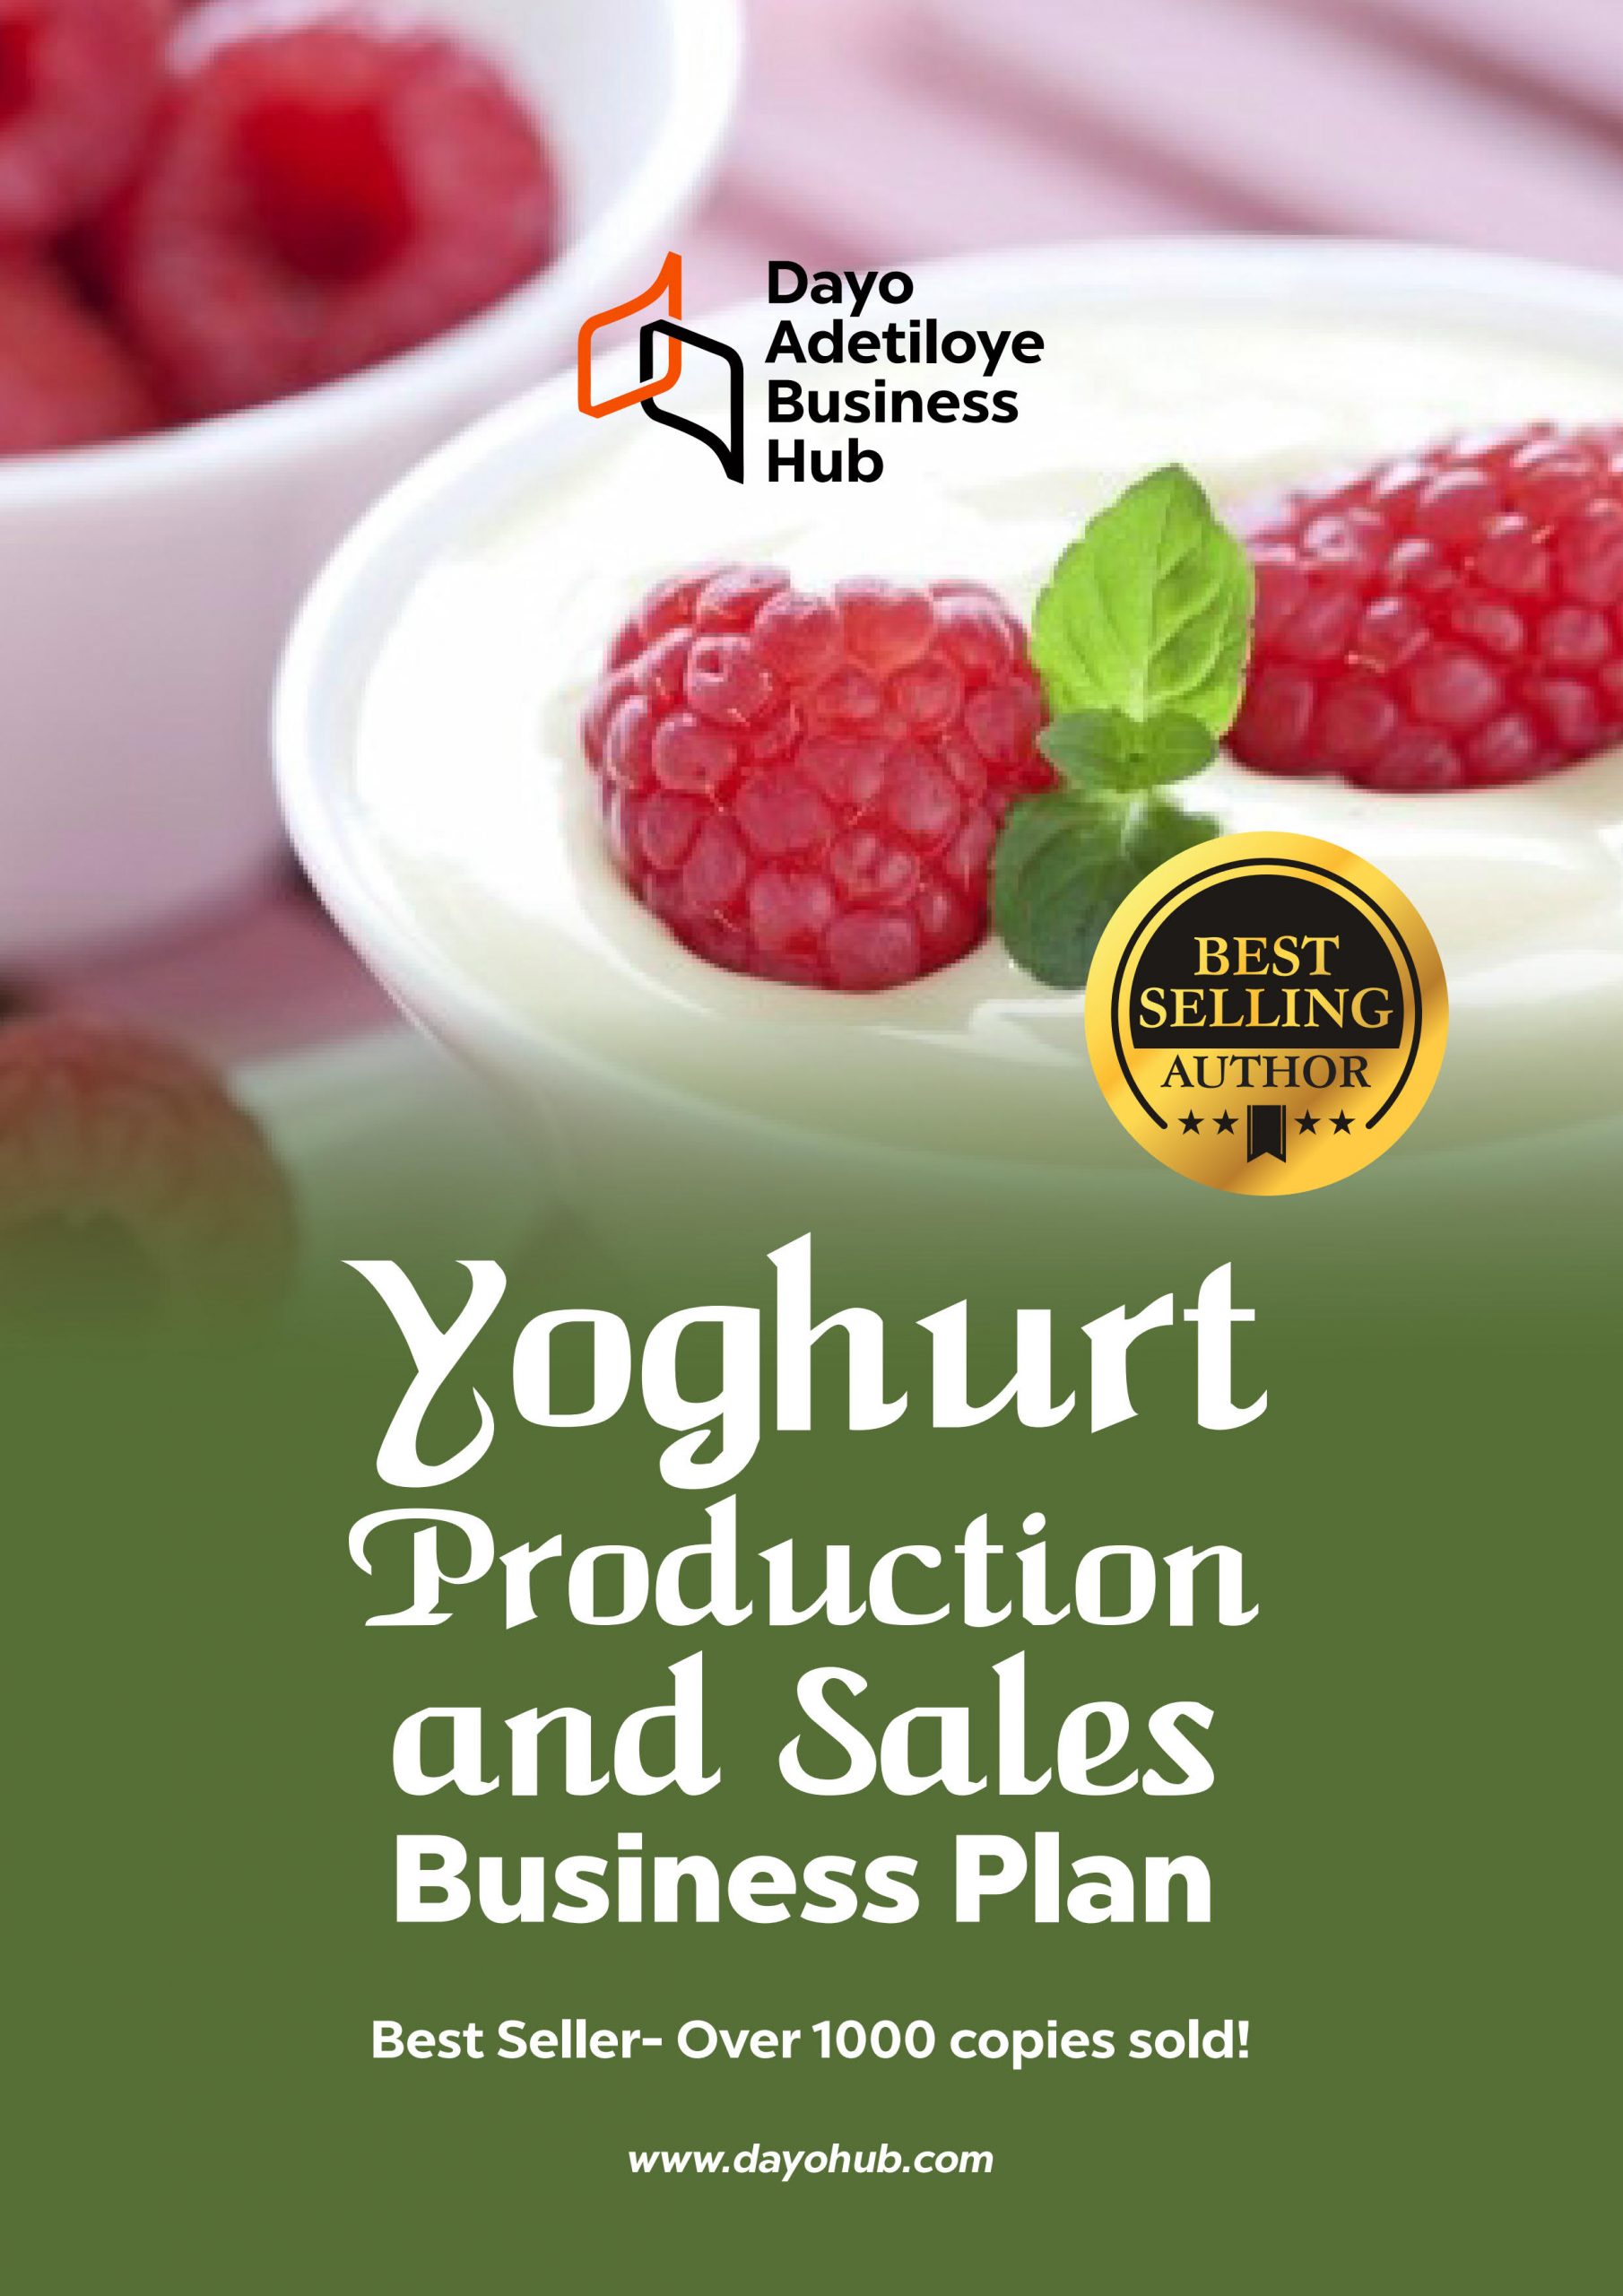 how to write business plan on yoghurt